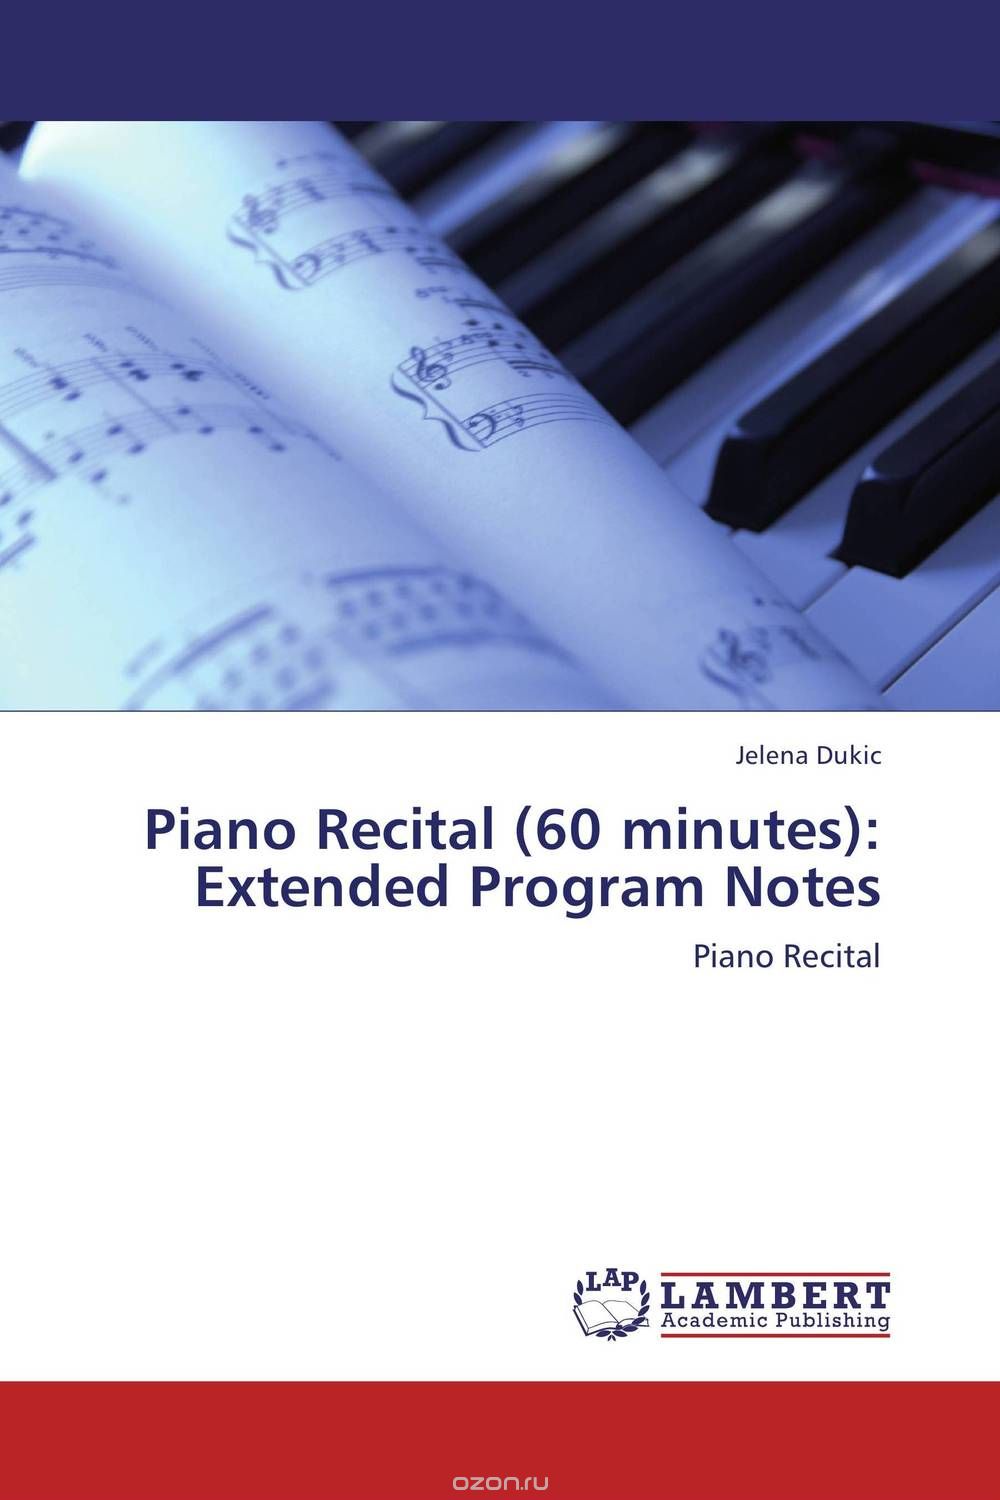 Скачать книгу "Piano Recital (60 minutes): Extended Program Notes"